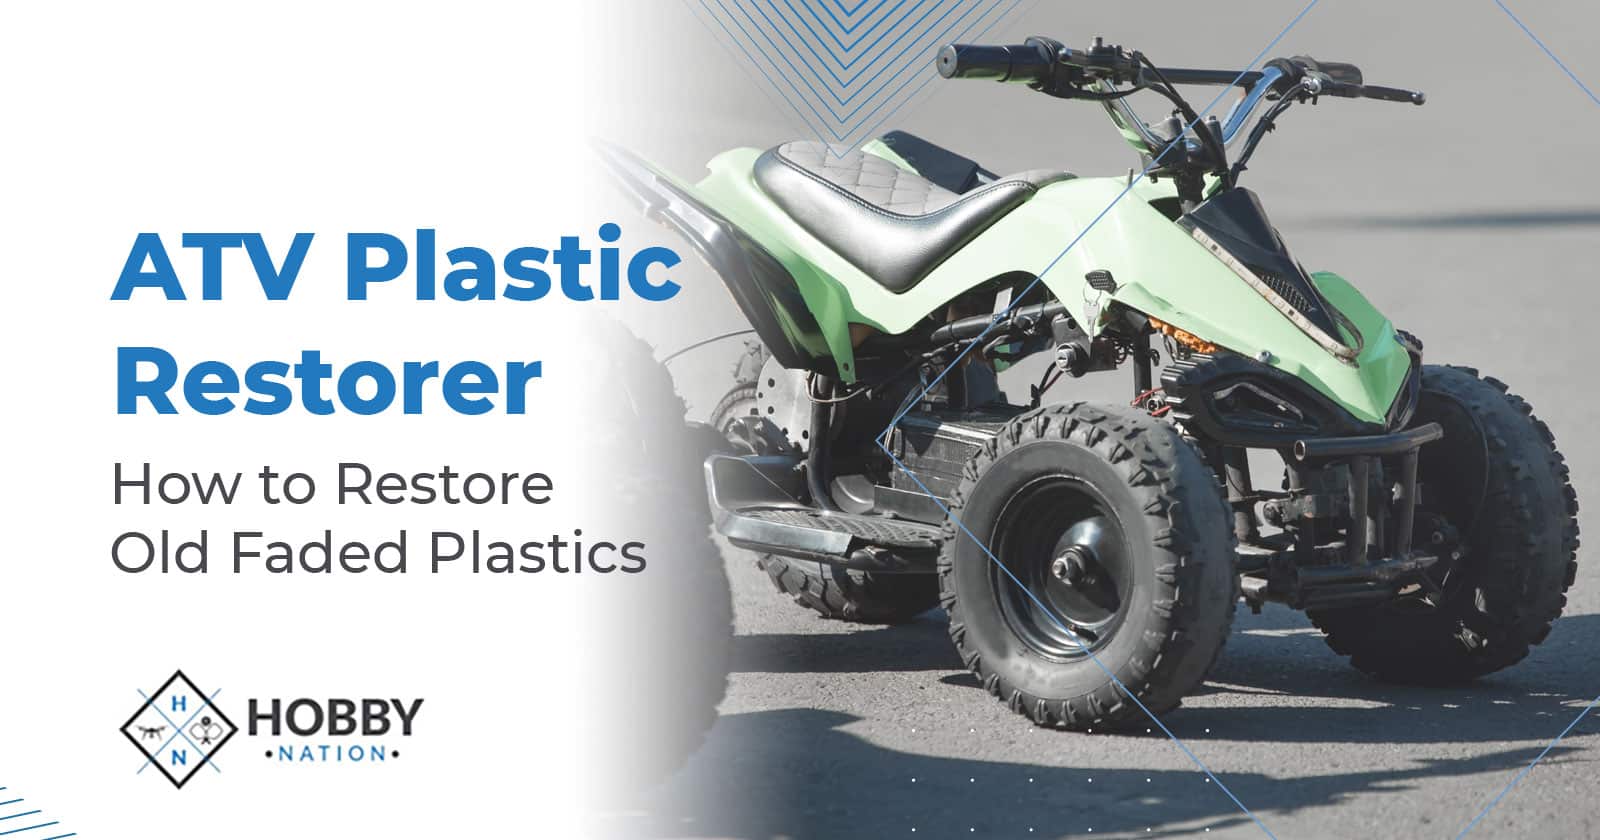 ATV Plastic Restorer – How to Restore Old Faded Plastics